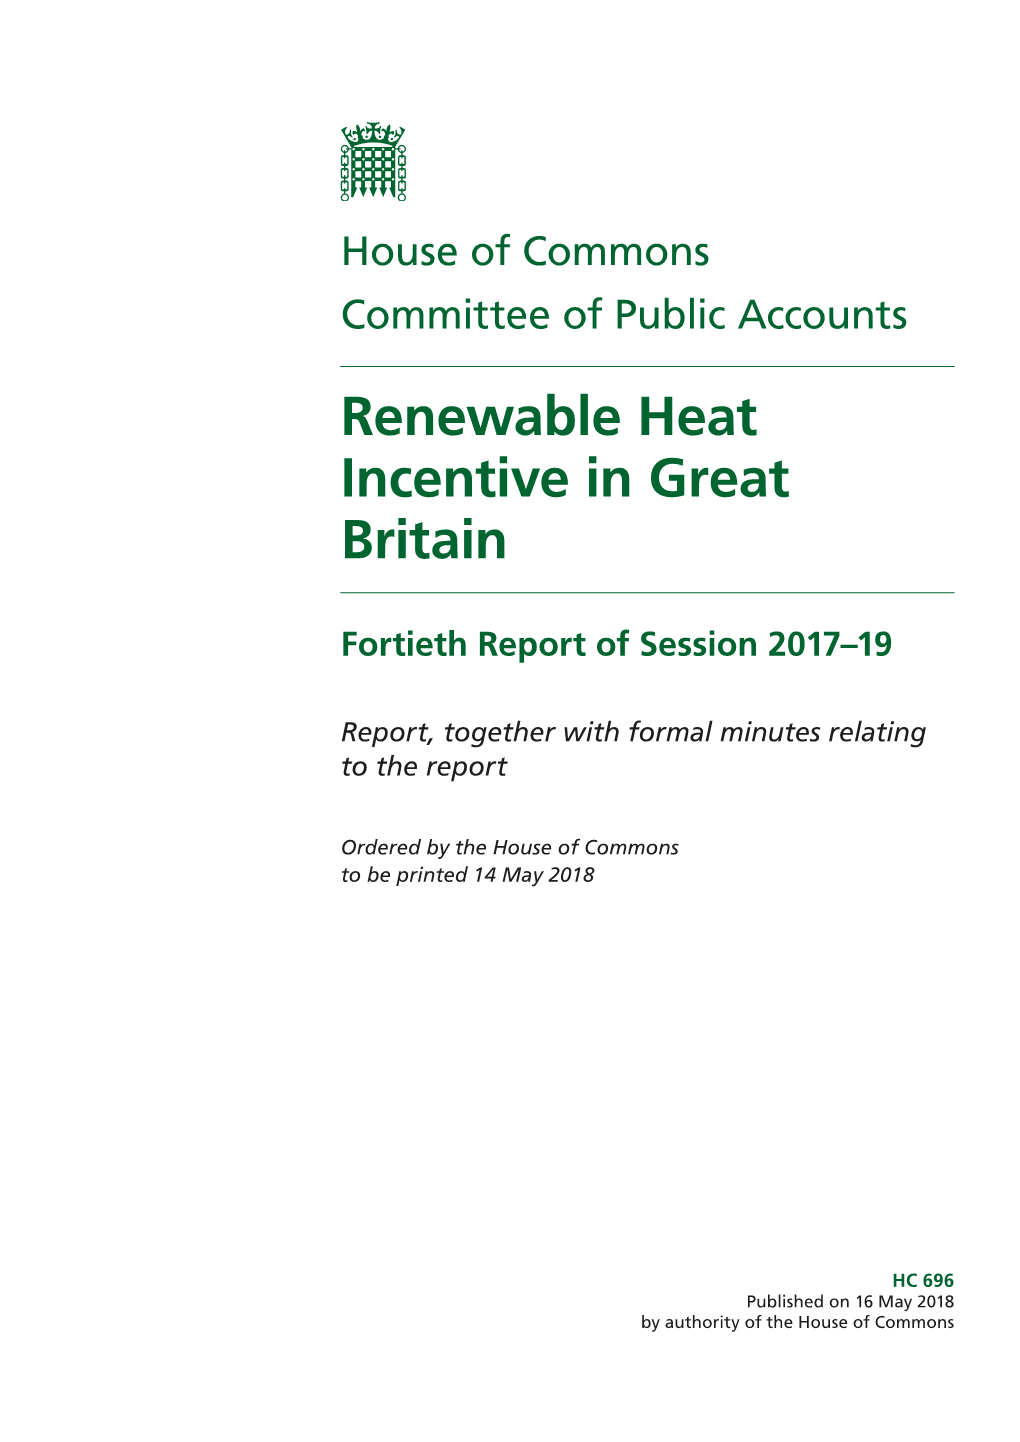 Renewable Heat Incentive in Great Britain